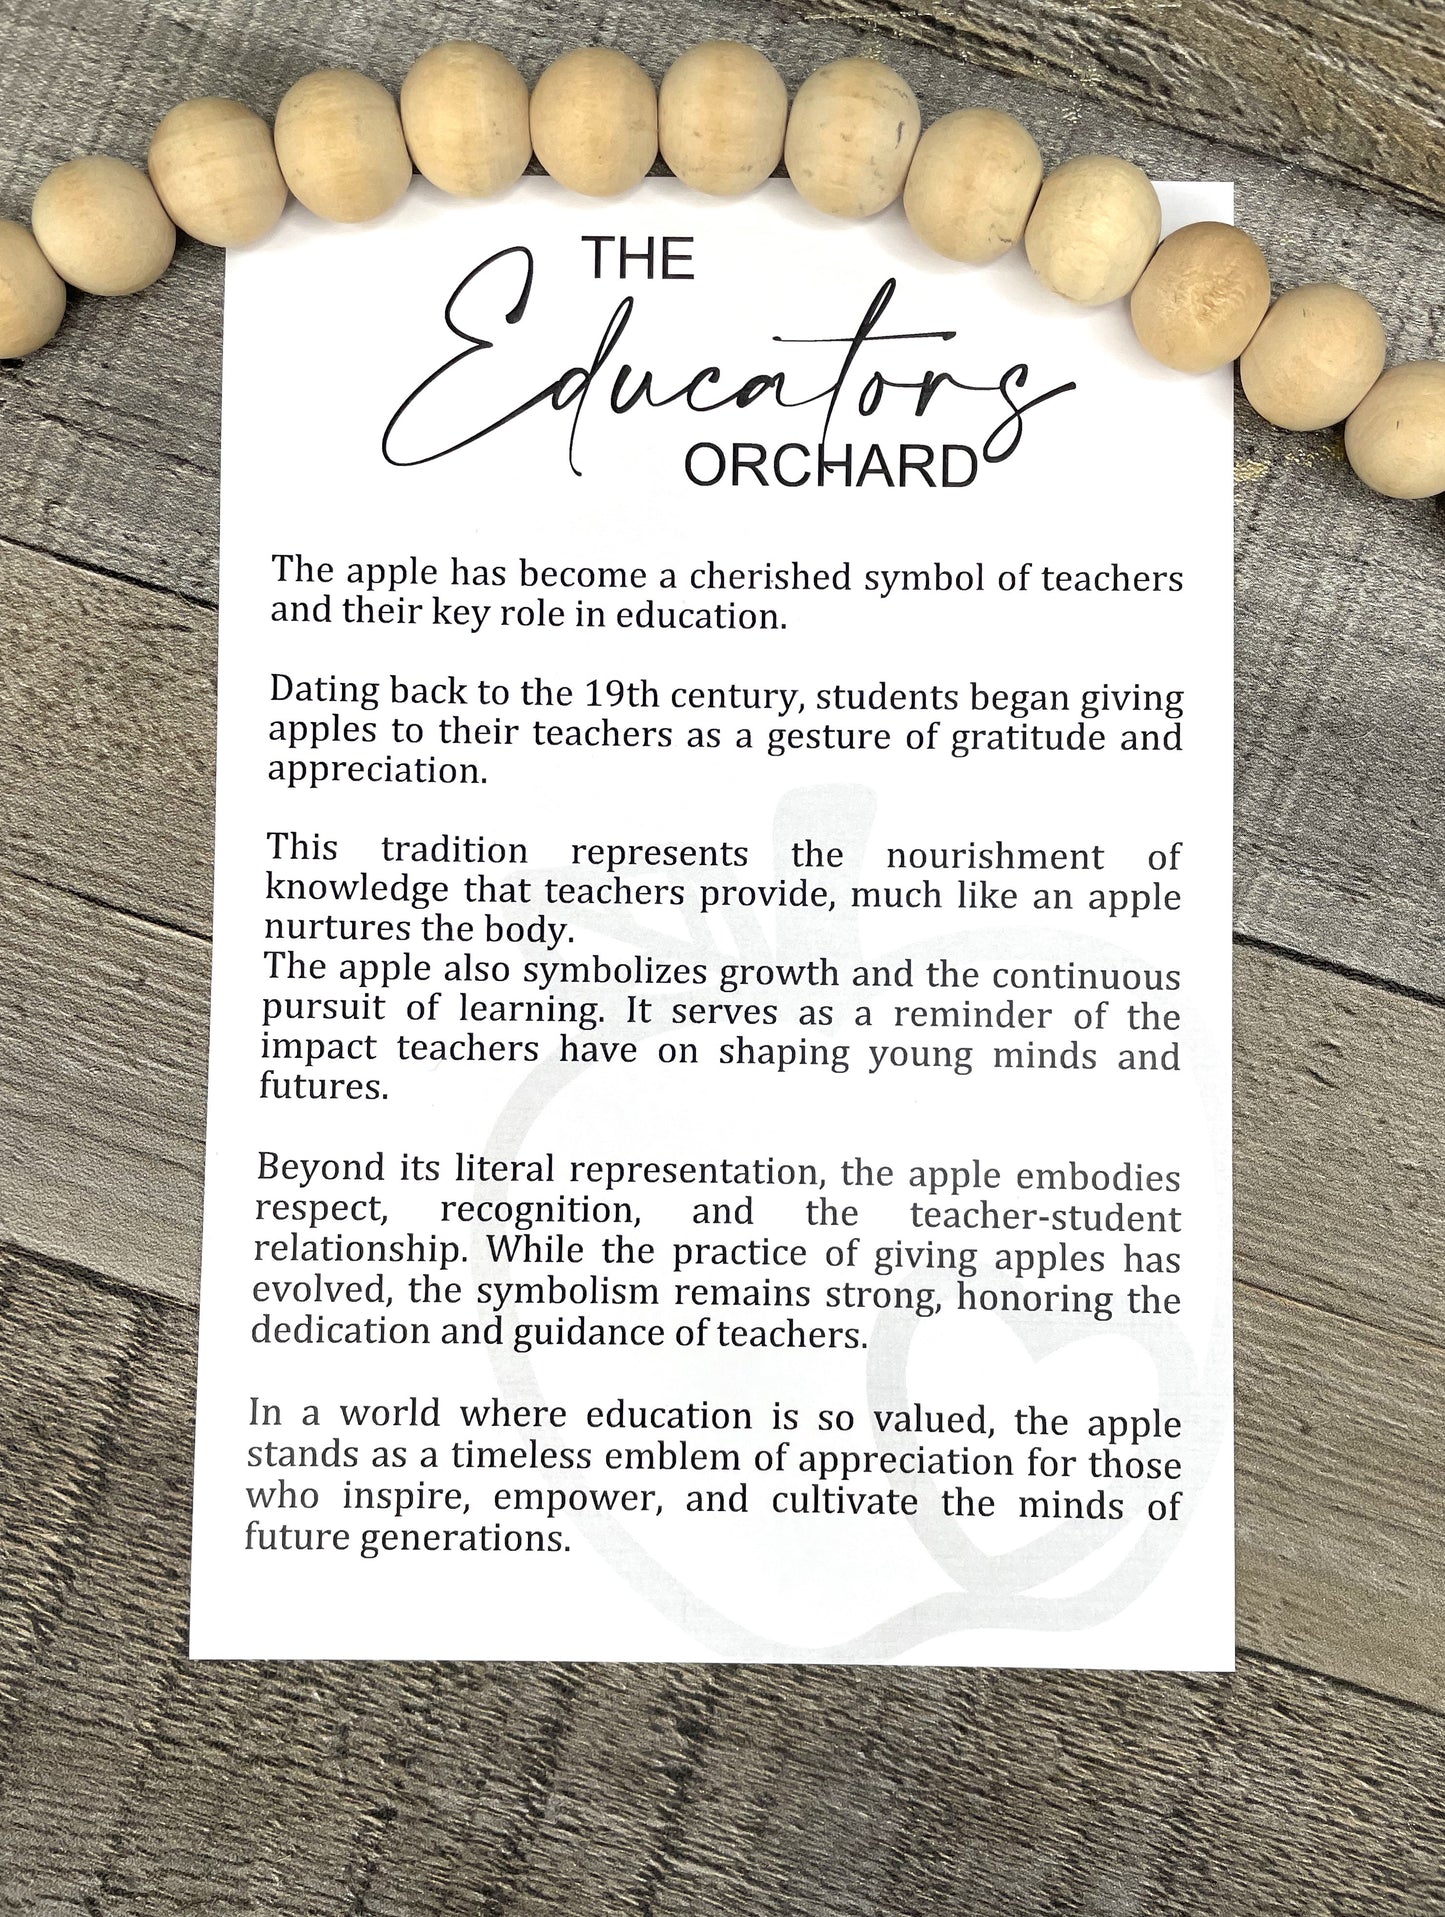 Apple Story Ornament: The Educators Orchard